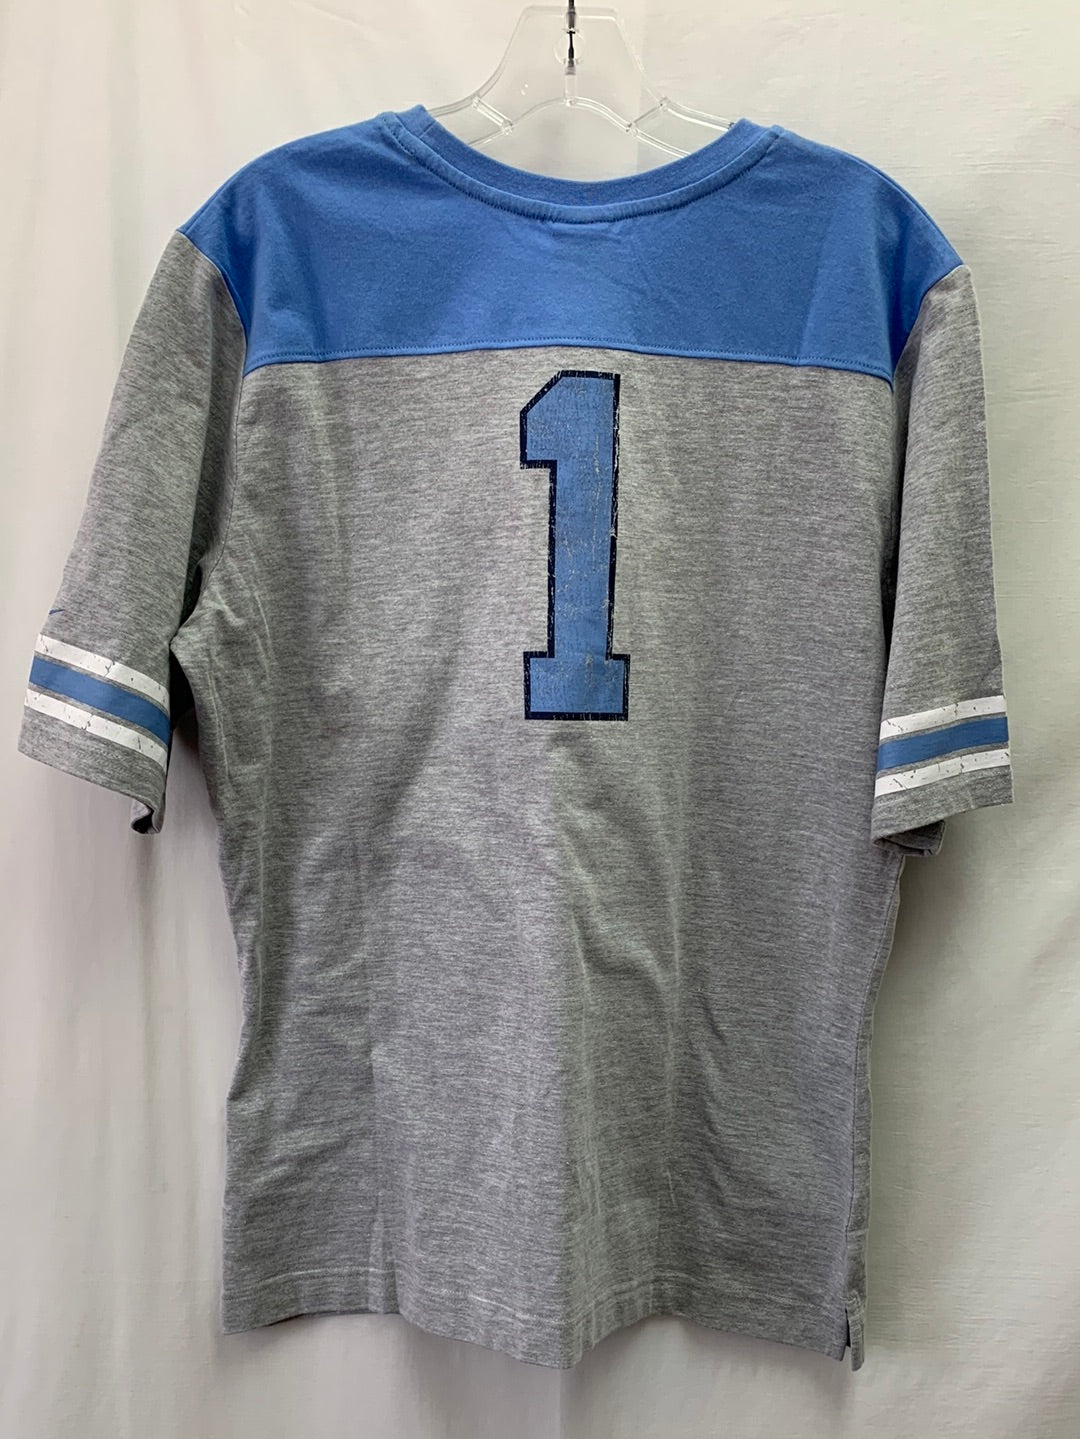 NWT - NIKE blue gray "CAROLINA 1" Short Sleeve Shirt - XL